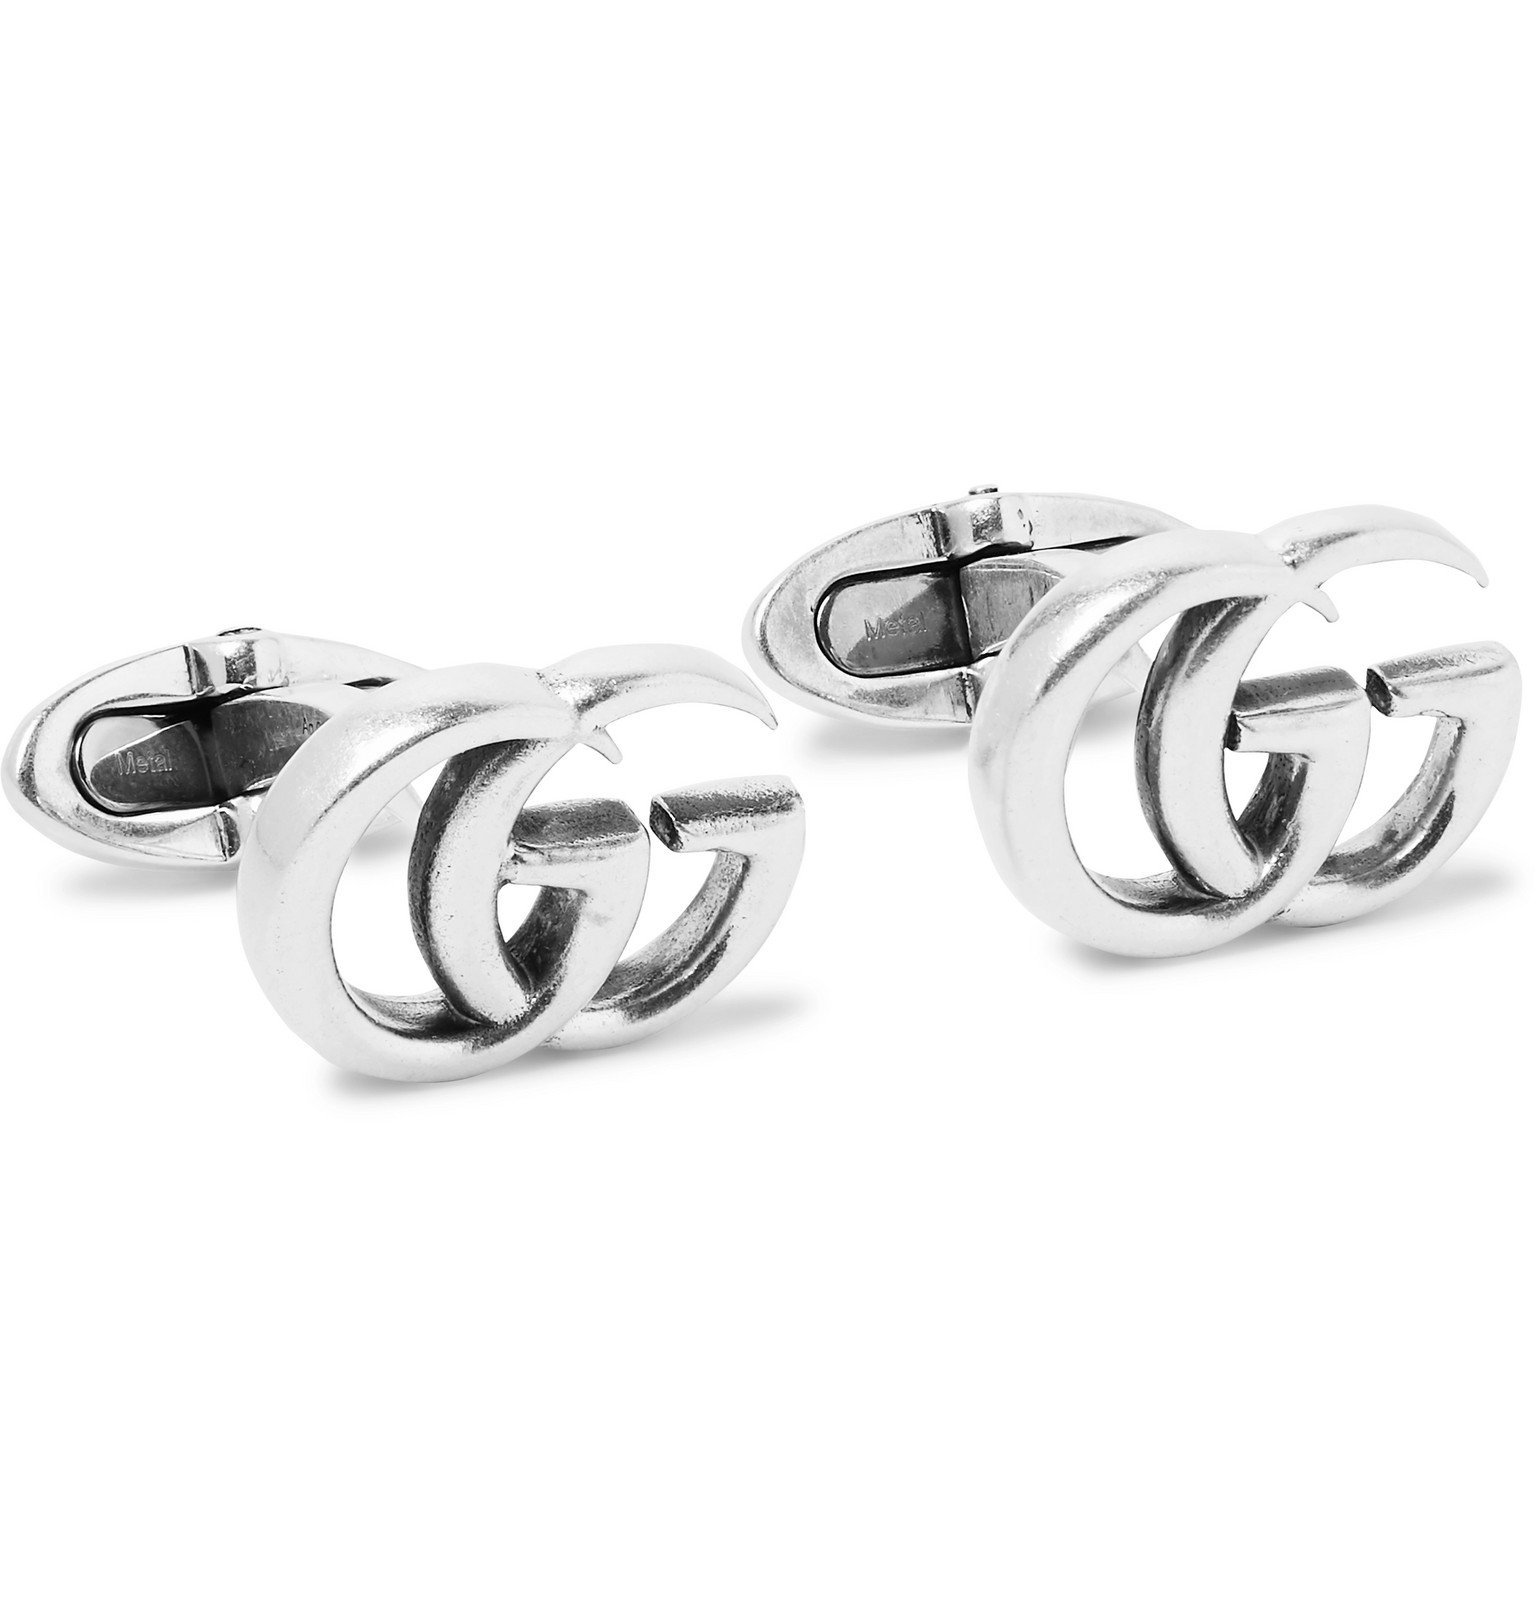 gucci cufflinks silver